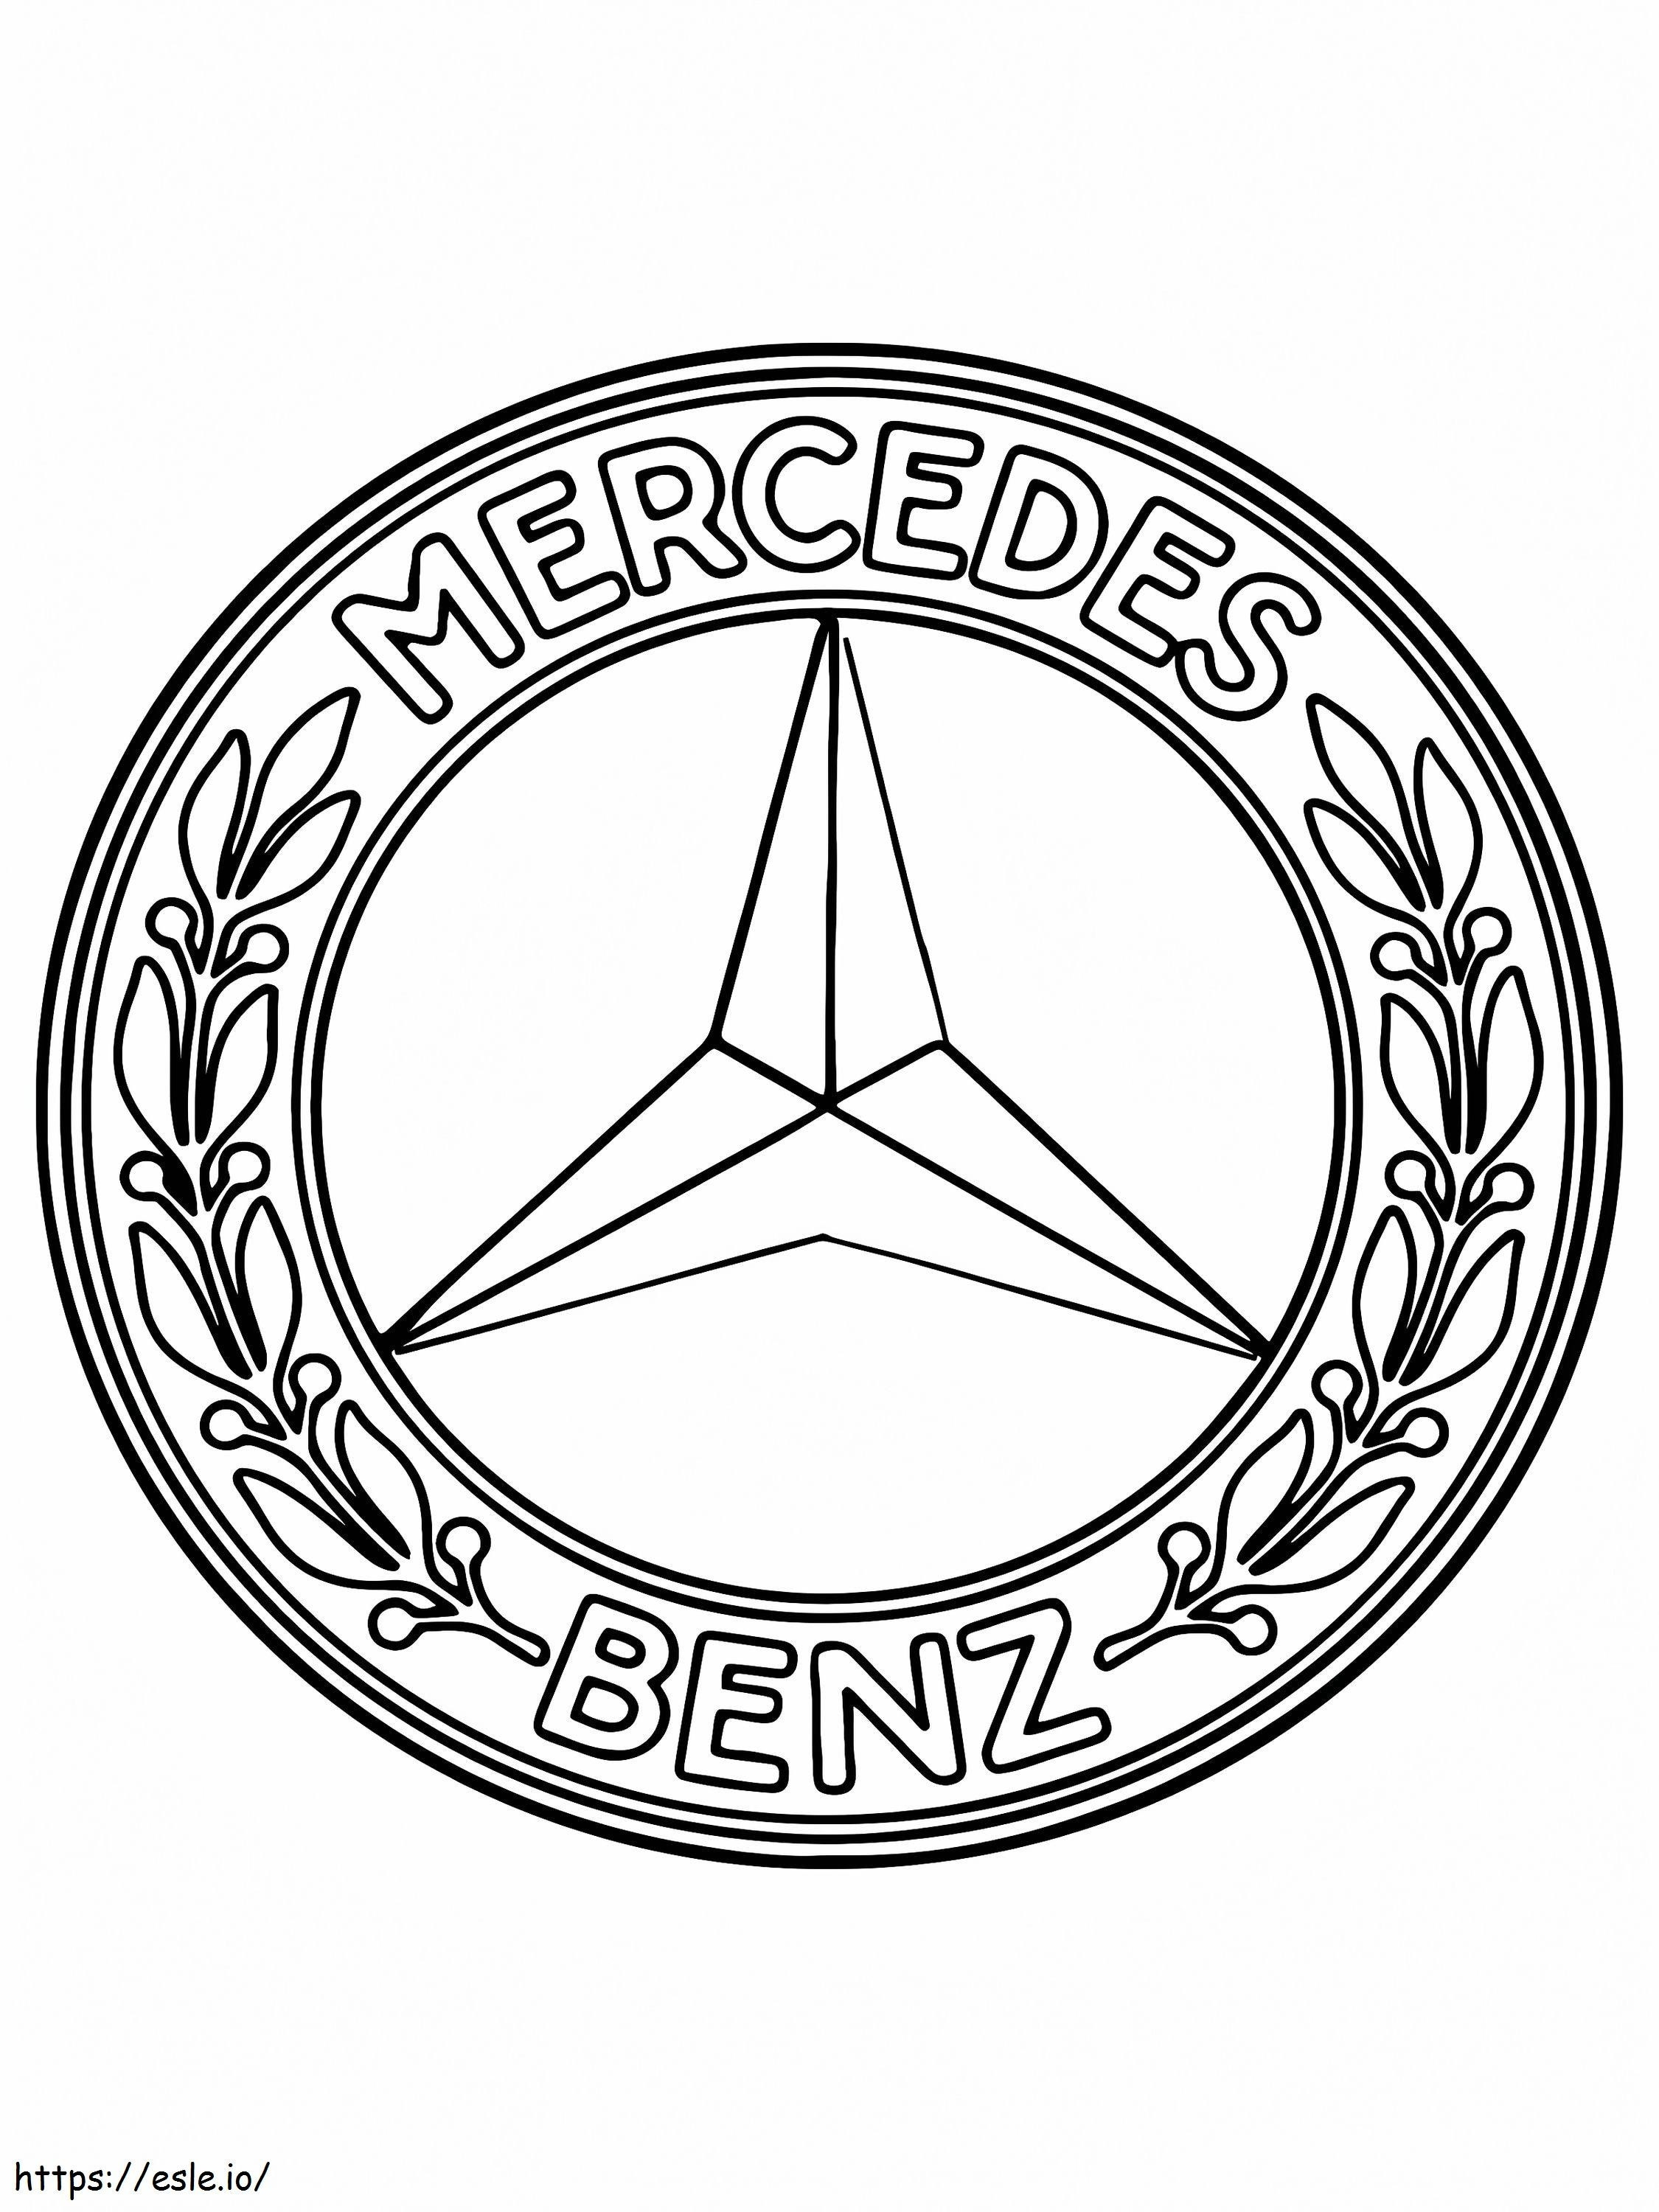 Mercedes Benz Car Logo coloring page